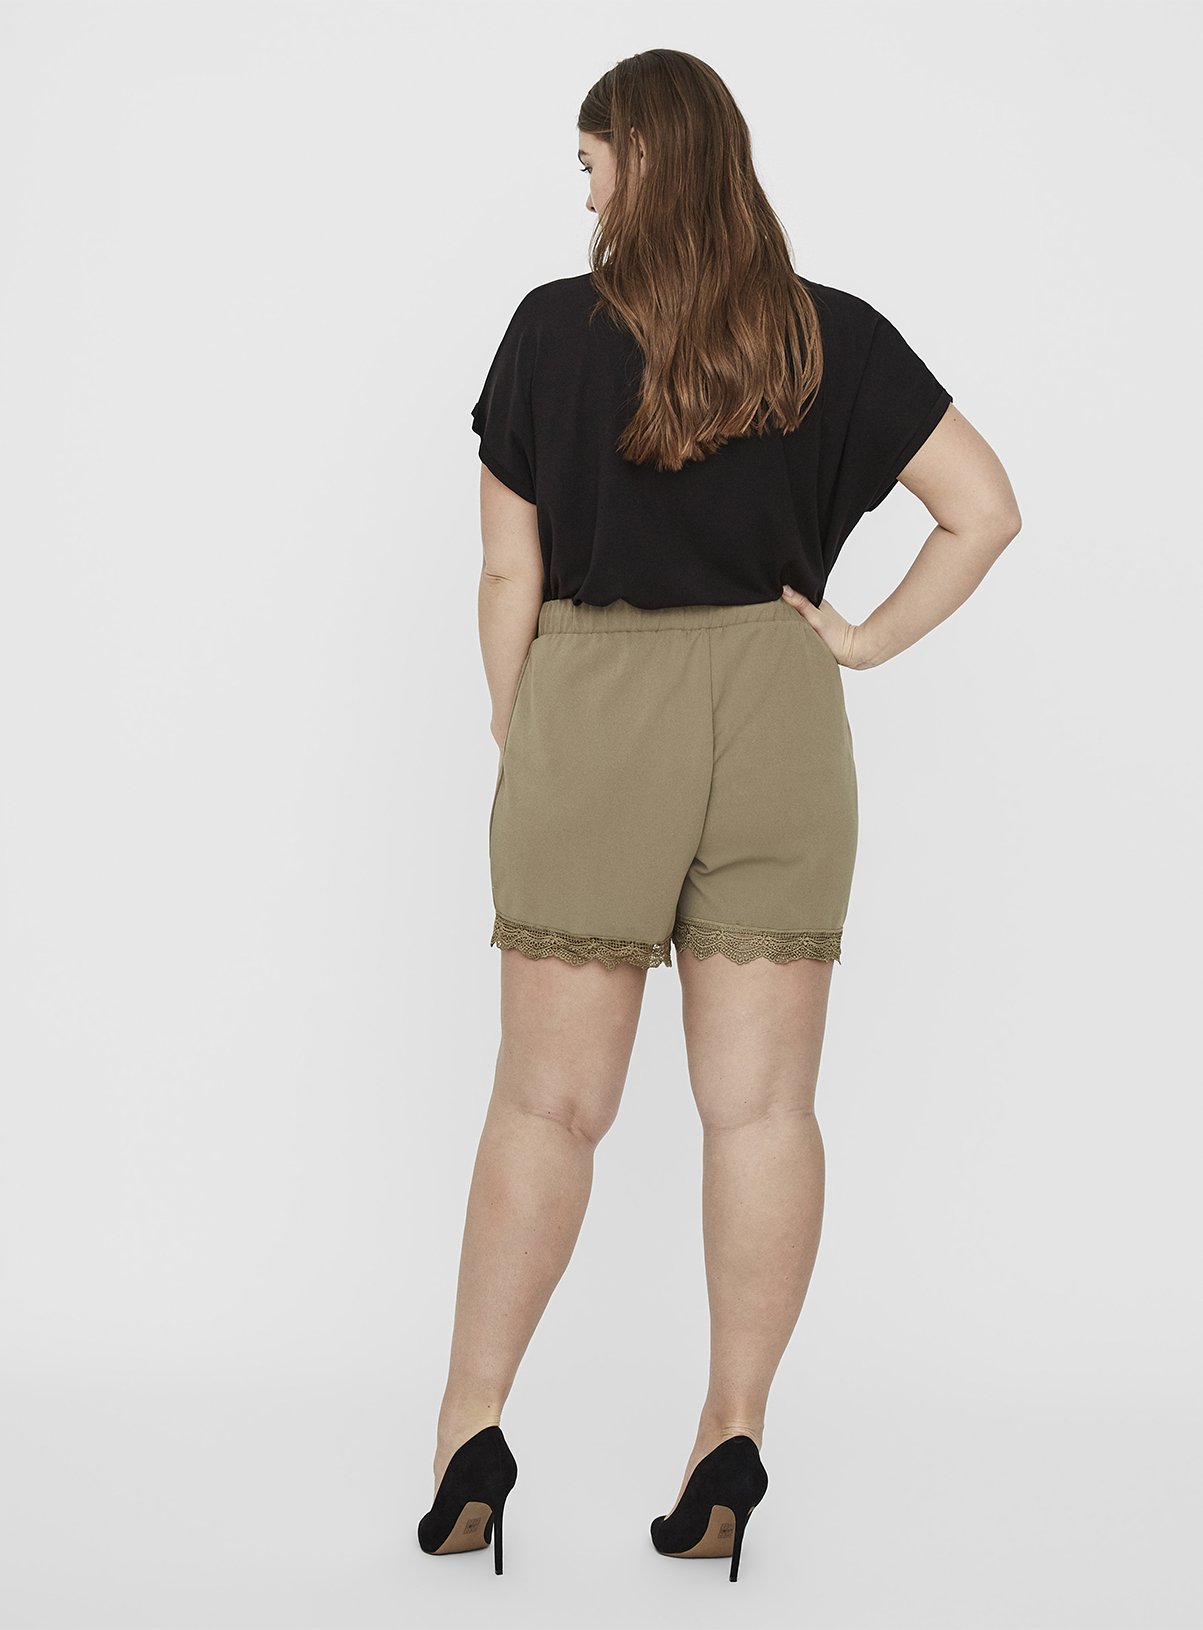 Olive Lace Trim Shorts Review